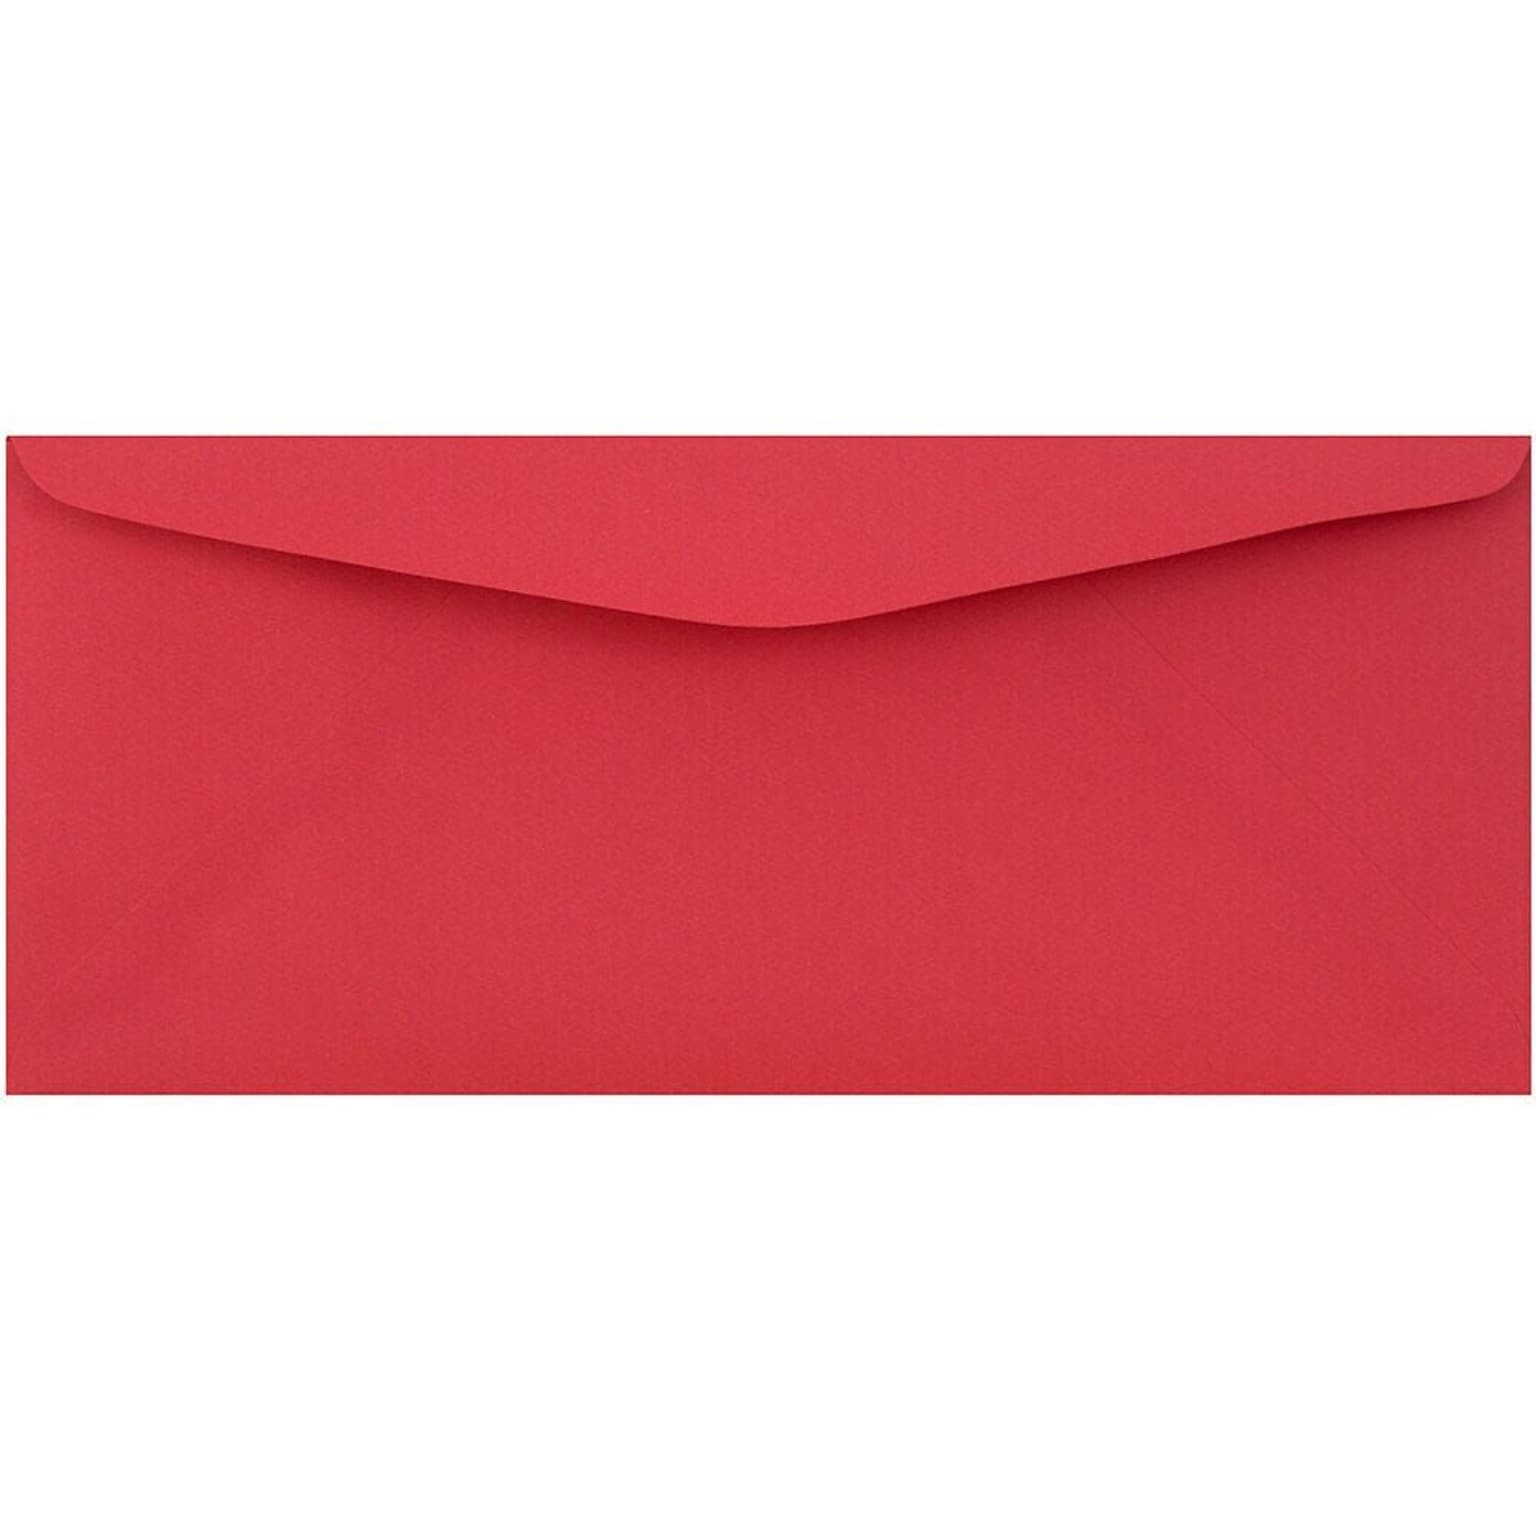 JAM Paper #9 Business Envelope, 3 7/8 x 8 7/8, Red, 100/Pack (1532900D)